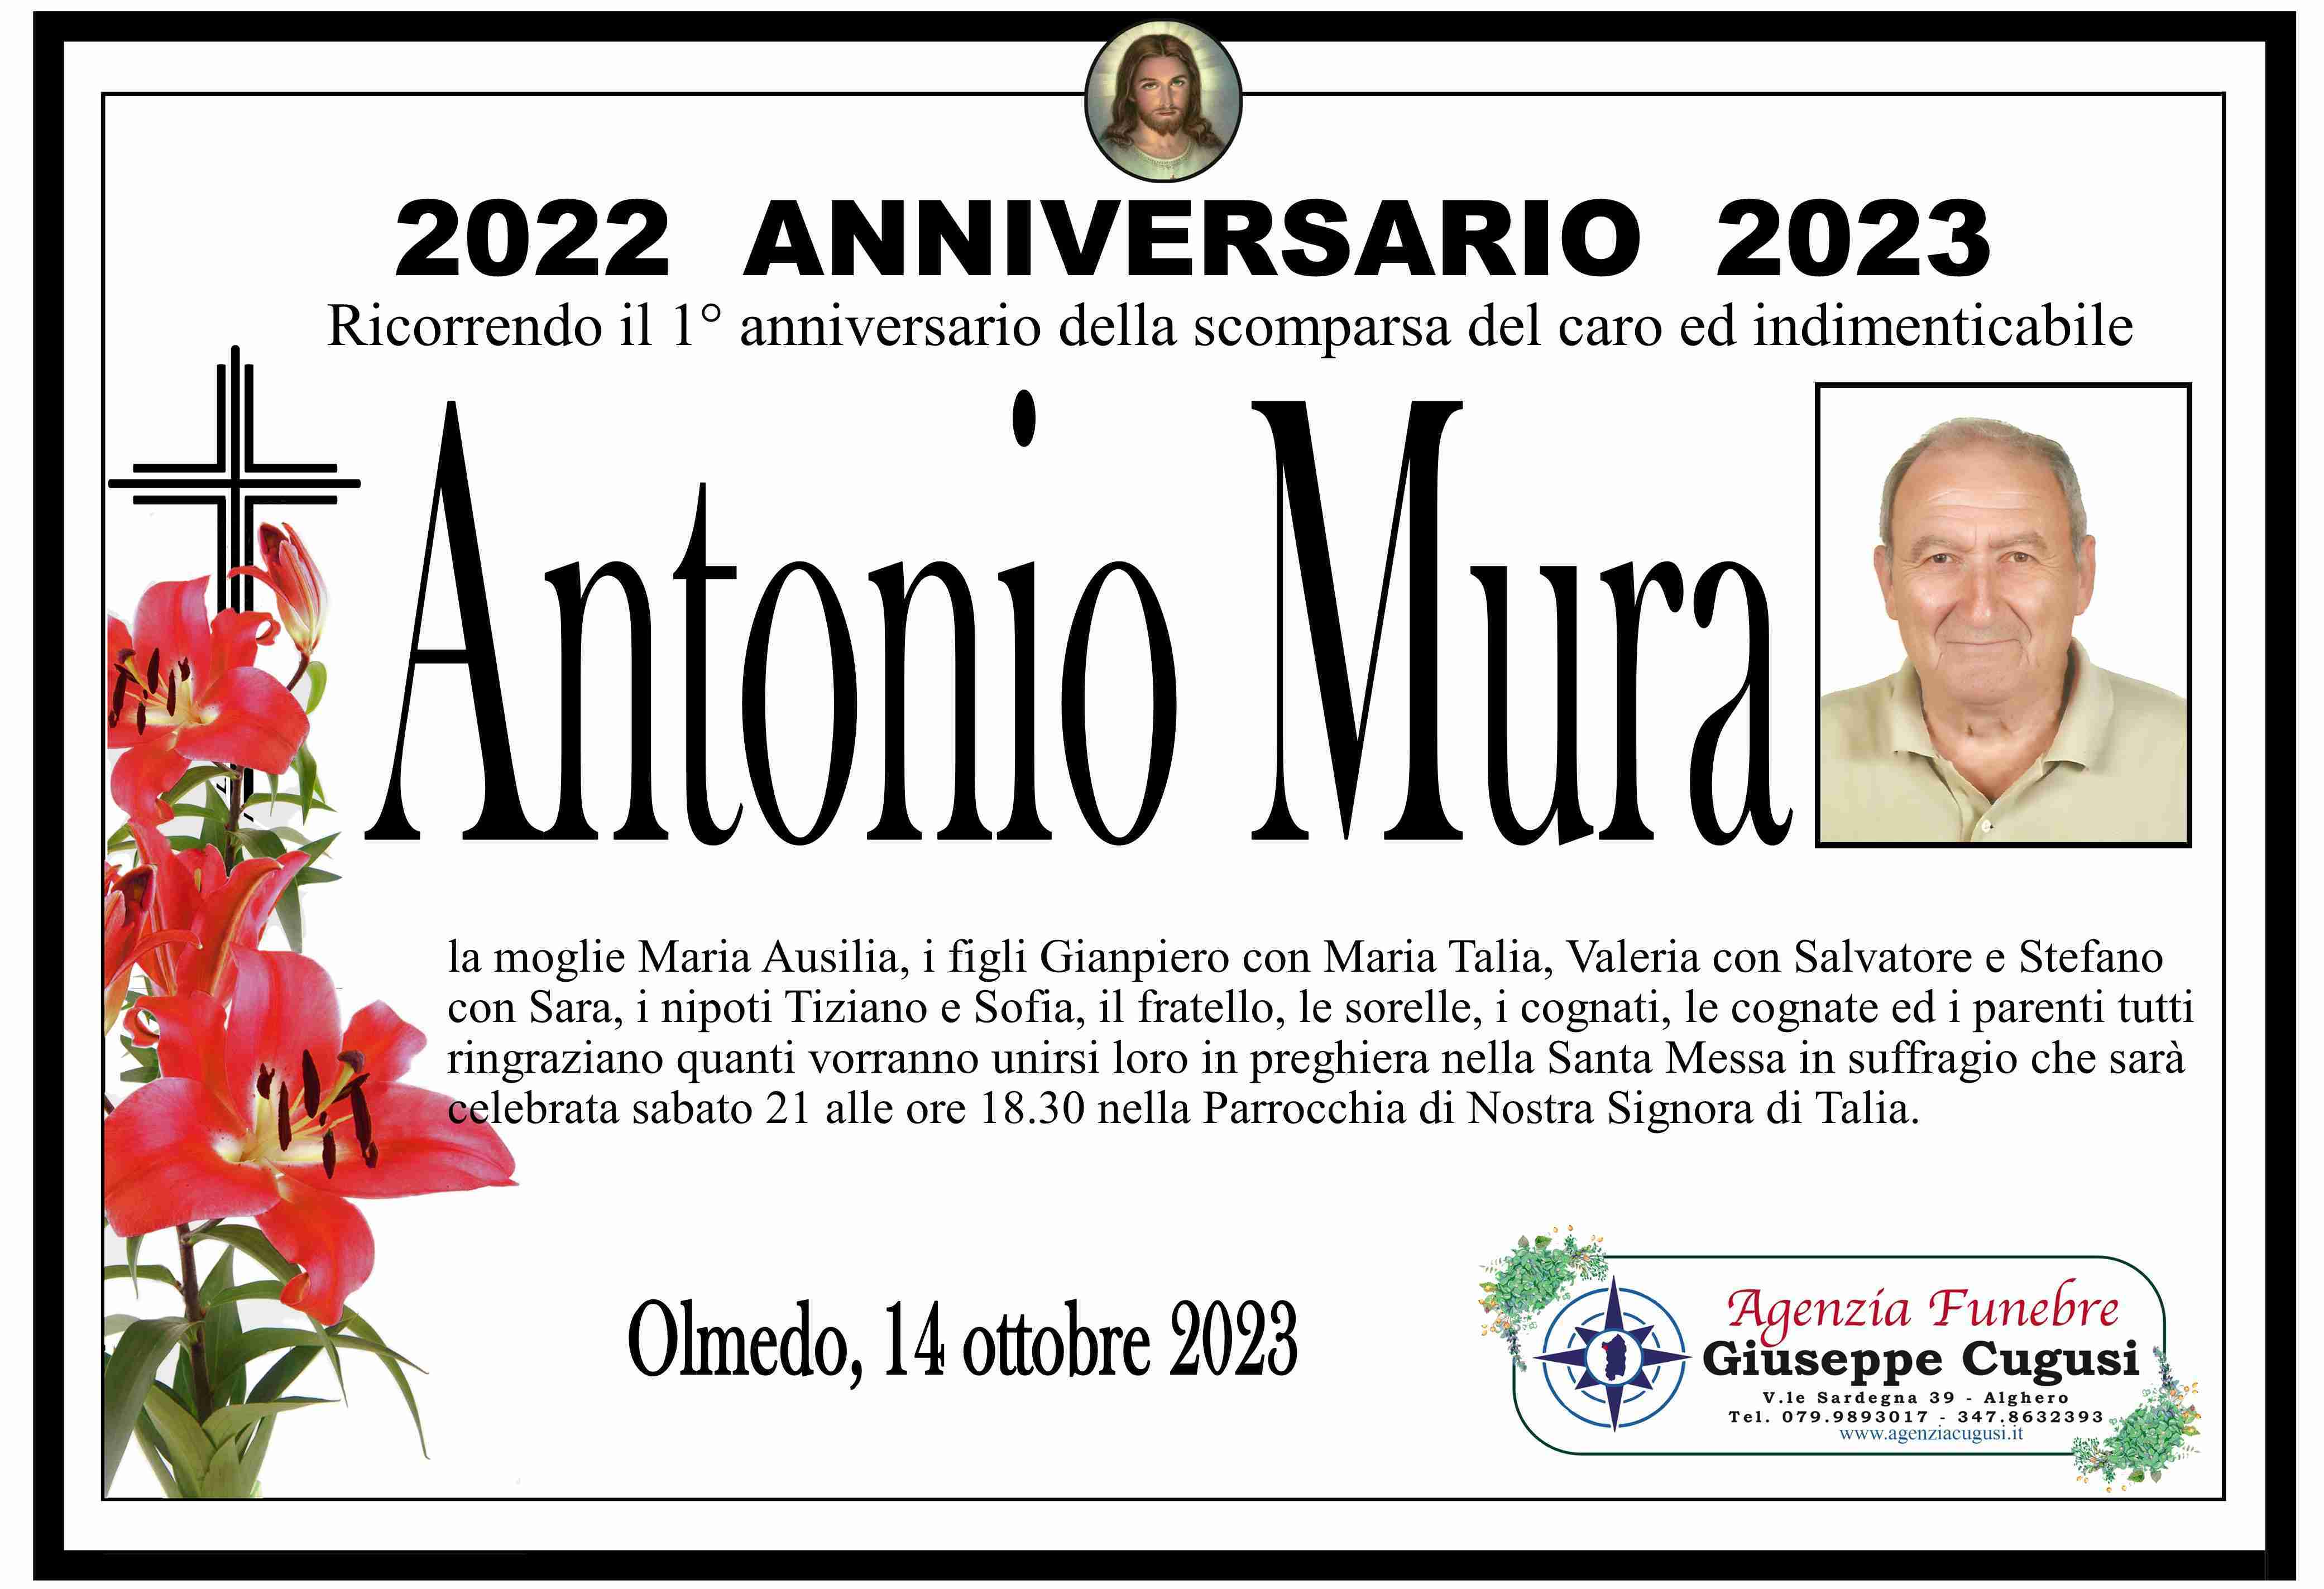 Antonio Mura